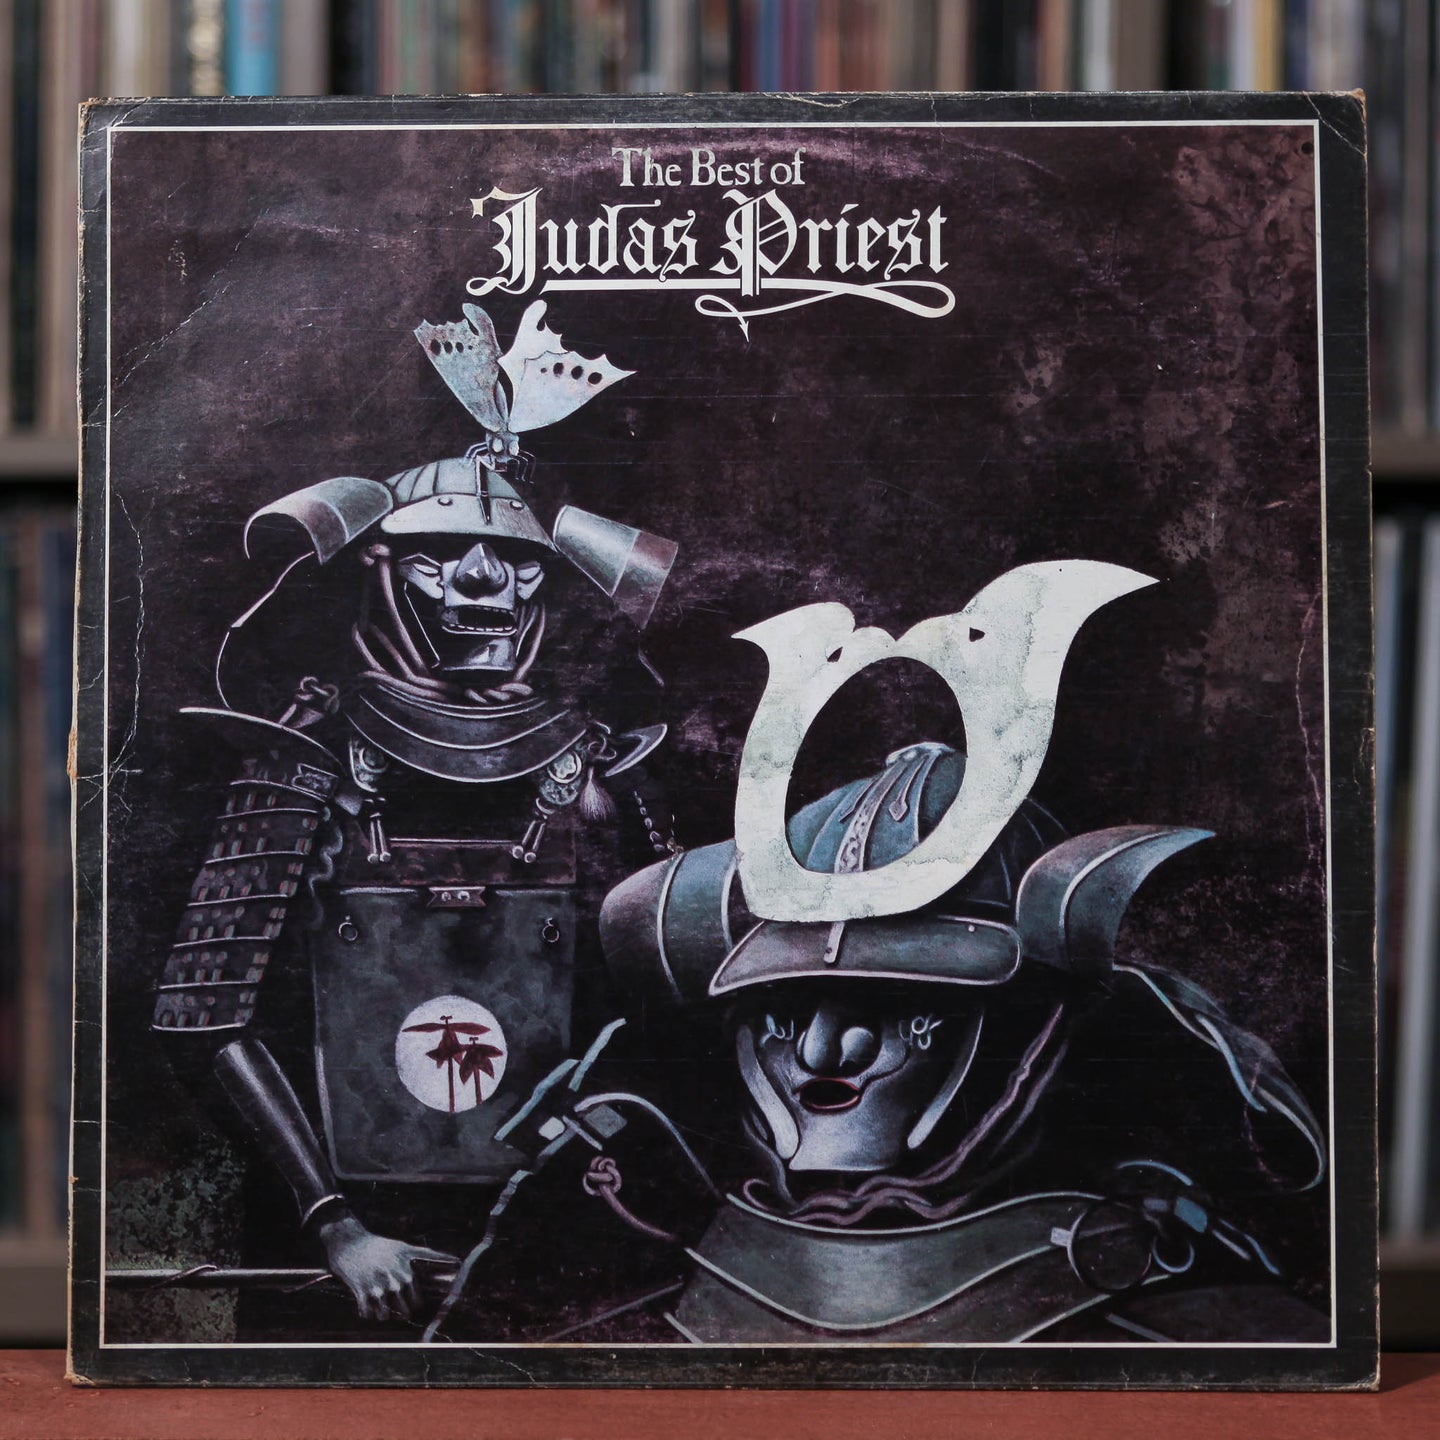 Judas Priest - The Best of - Italian Import - 1978 Gull, VG/VG